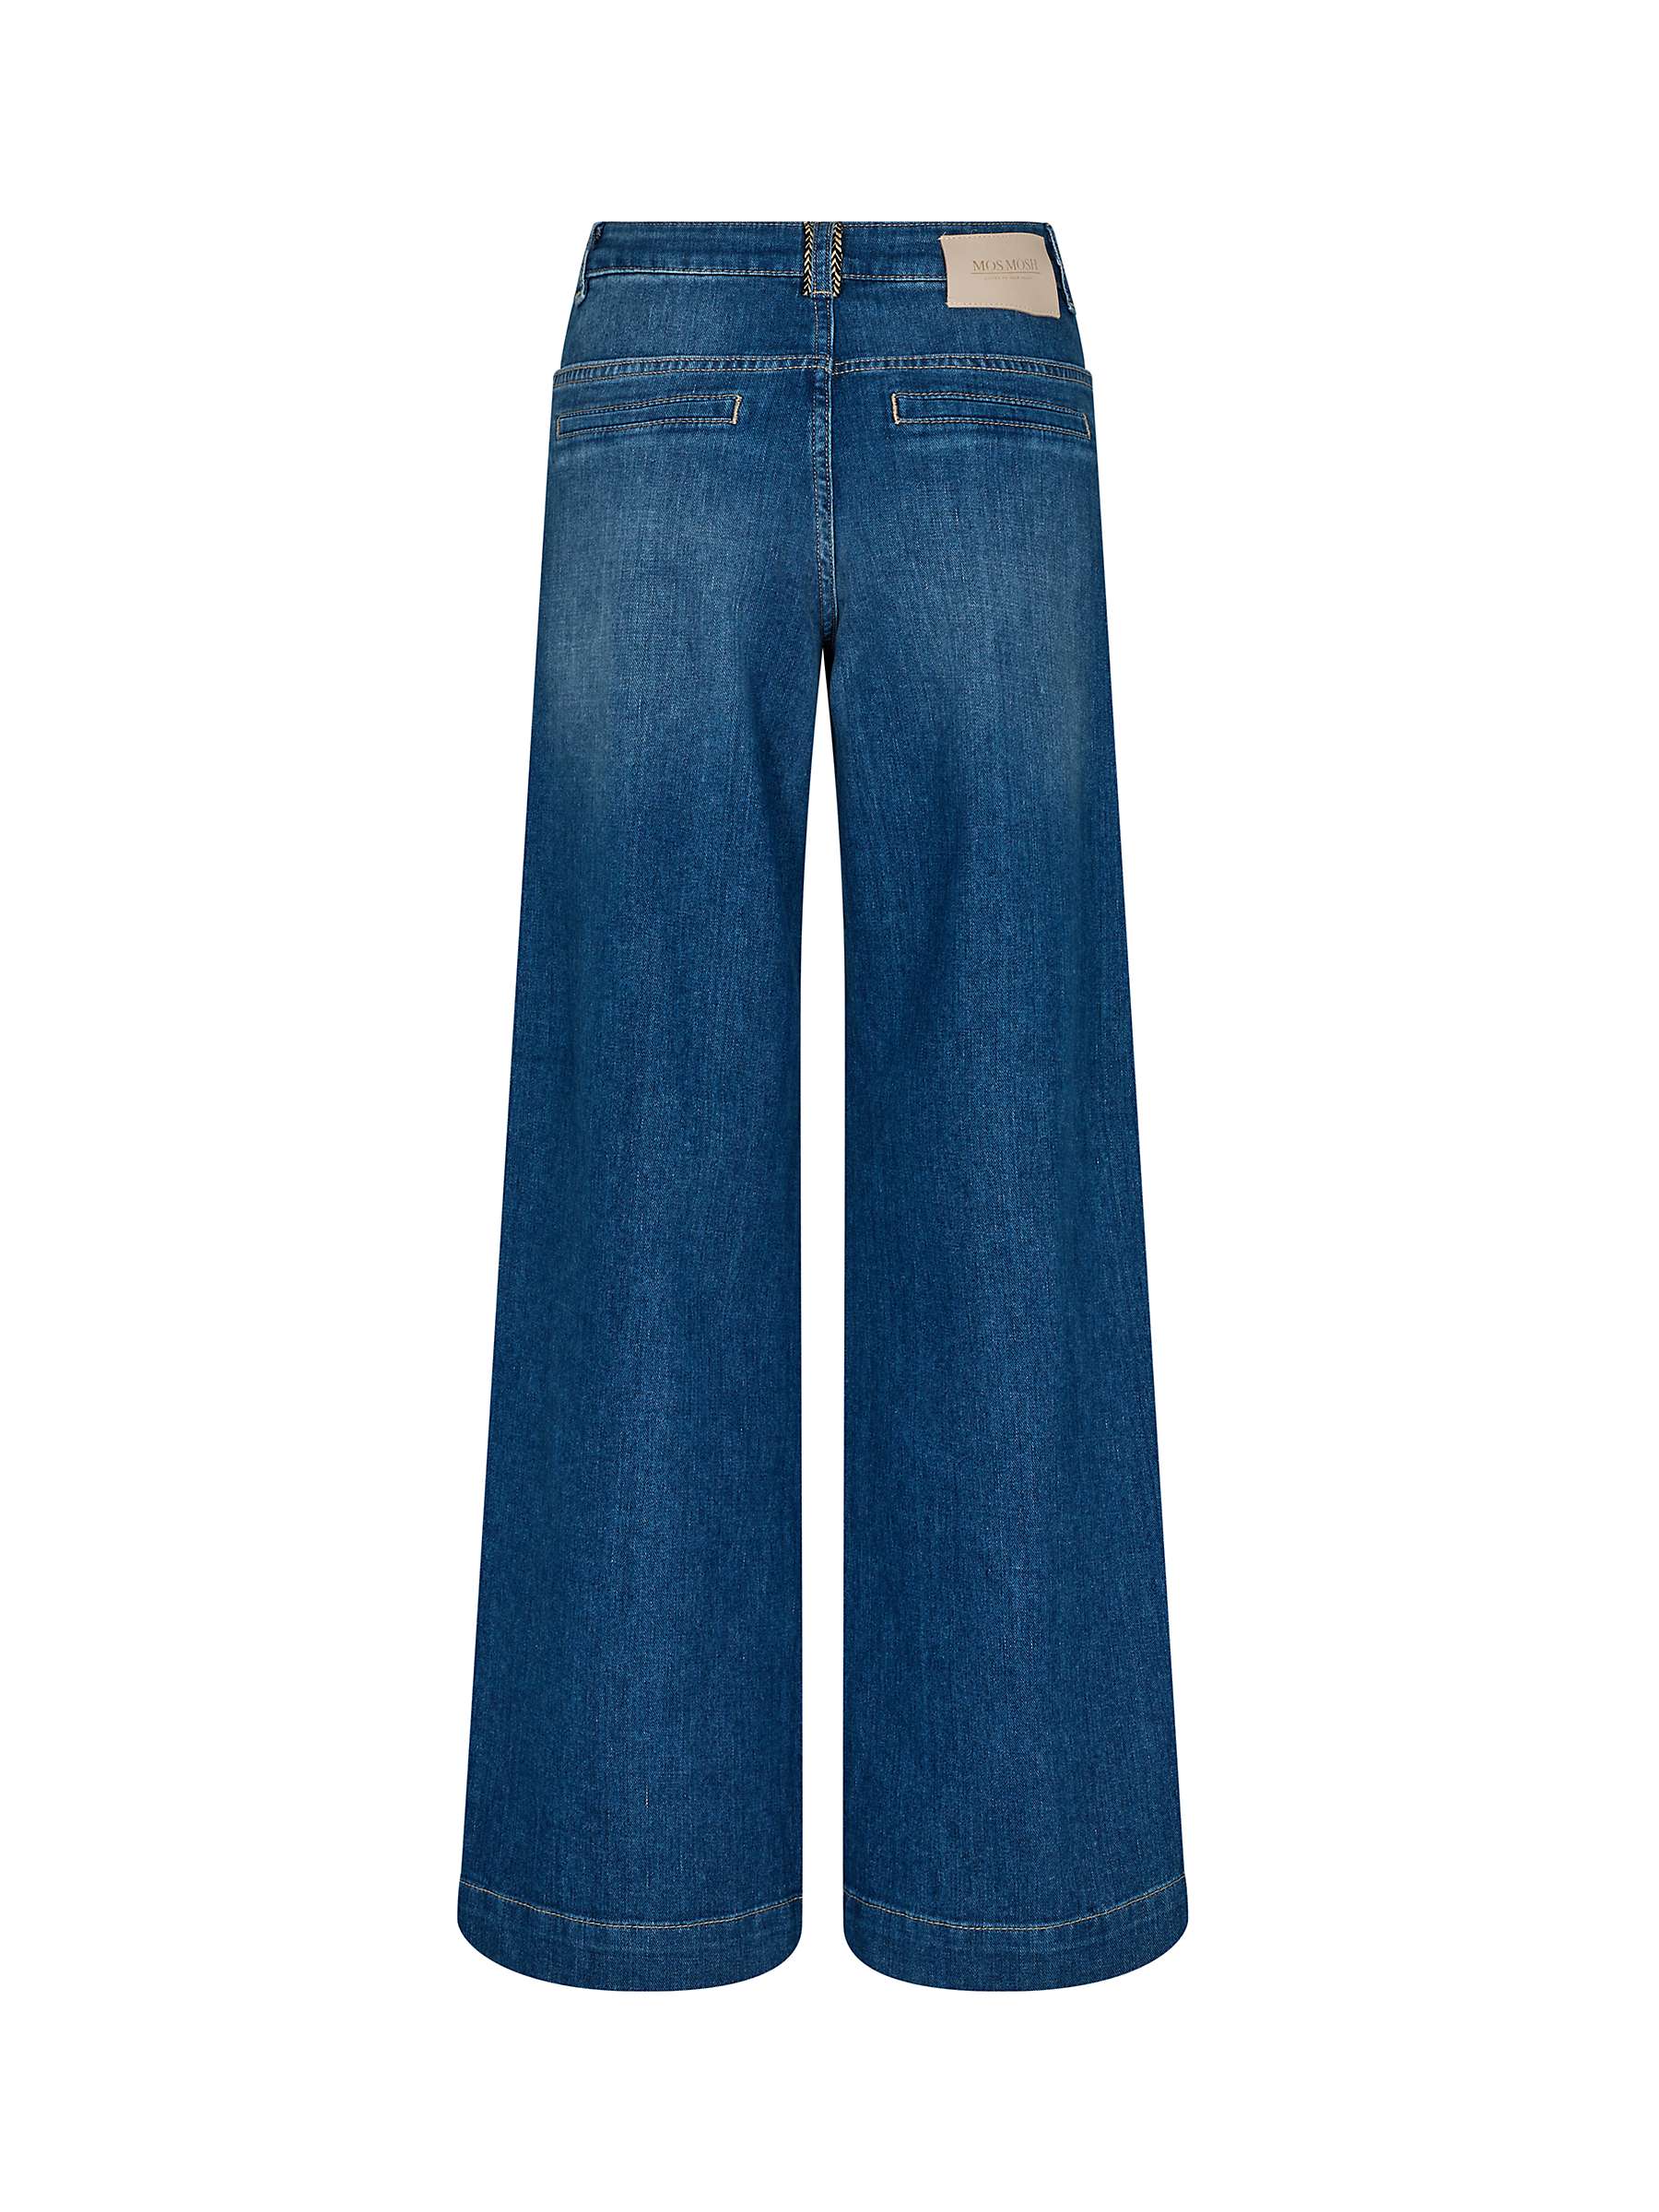 Buy MOS MOSH Colette Mico Jeans, Blue Online at johnlewis.com